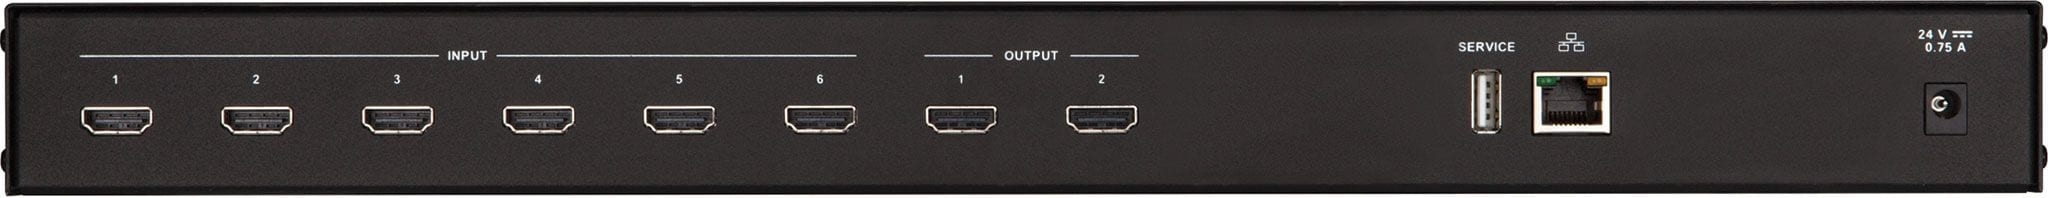 Crestron HD-MD6X2-4K-E - achterkant - HDMI switch